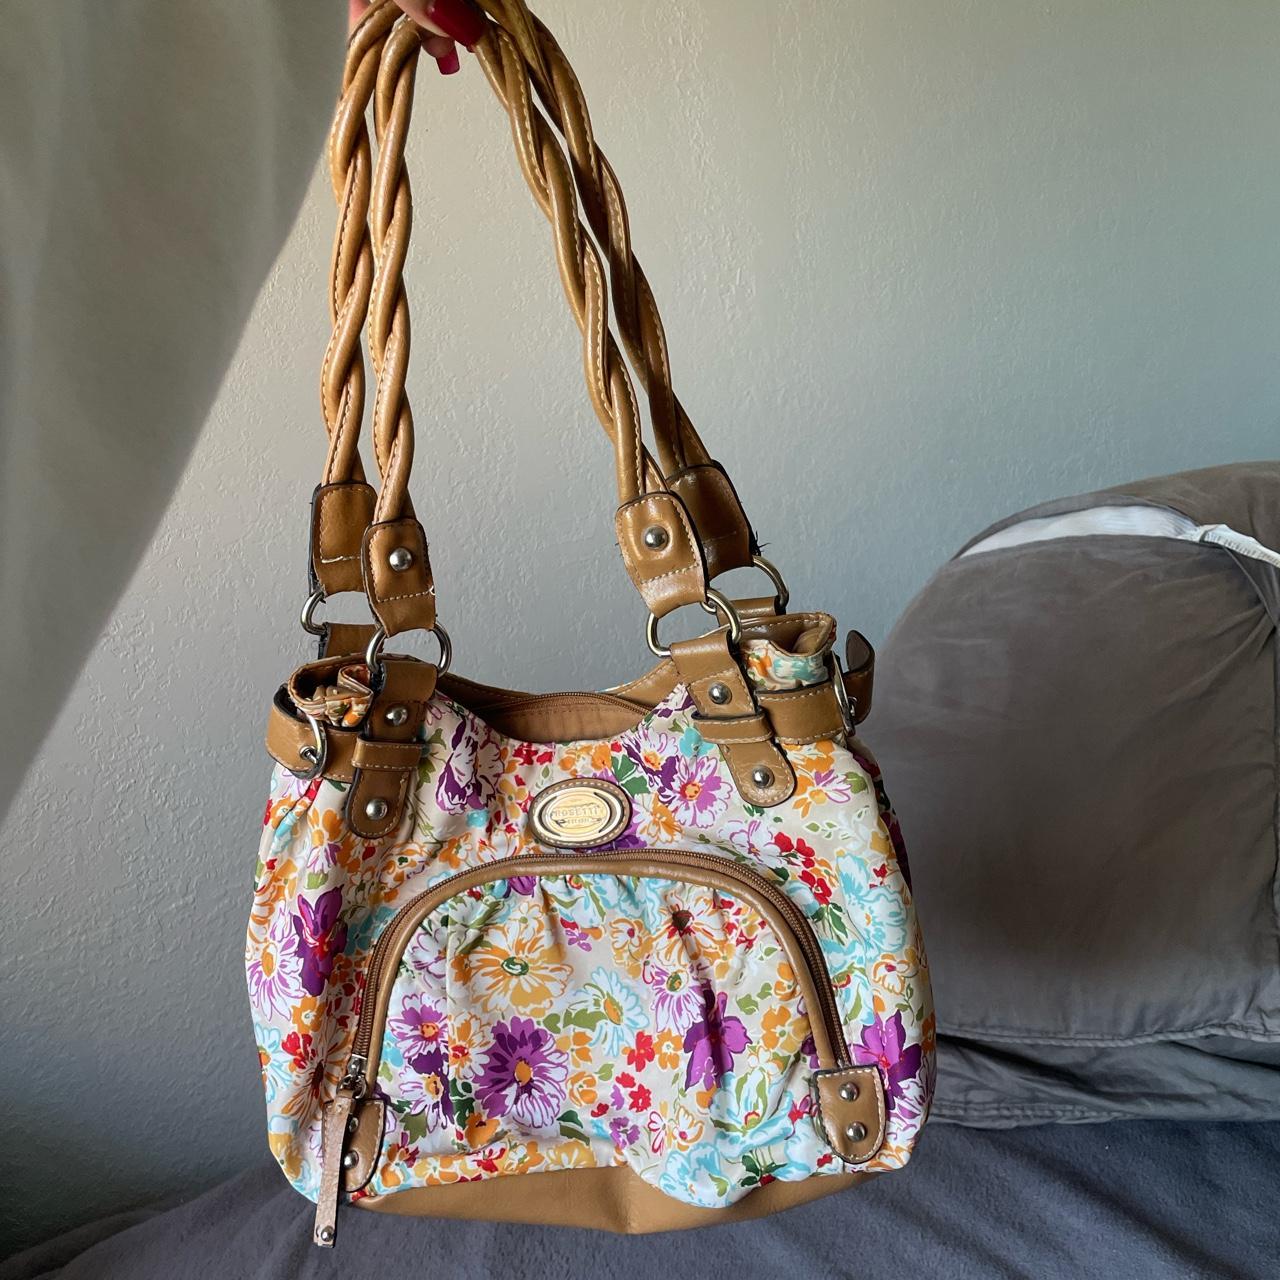 Rosetti Floral Shoulder Bag Tote Faux Leather Trim | eBay